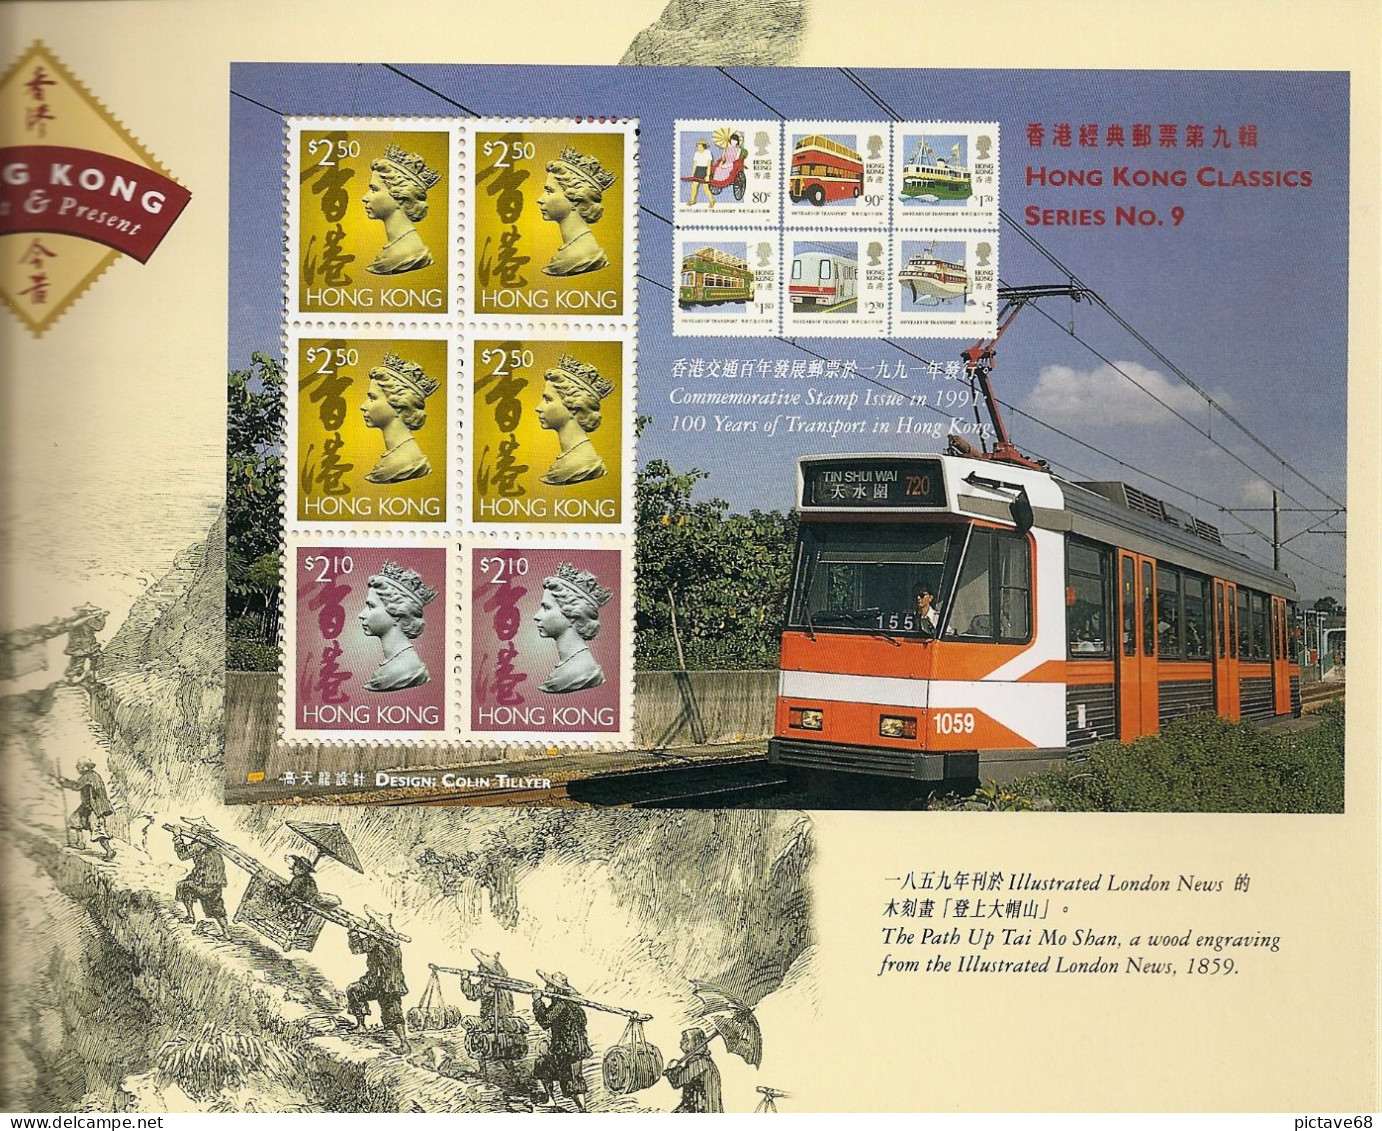 HONG-KONG / CARNET DE PRESTIGE STAMP EXHIBITION 1997 DE 55$ - Markenheftchen